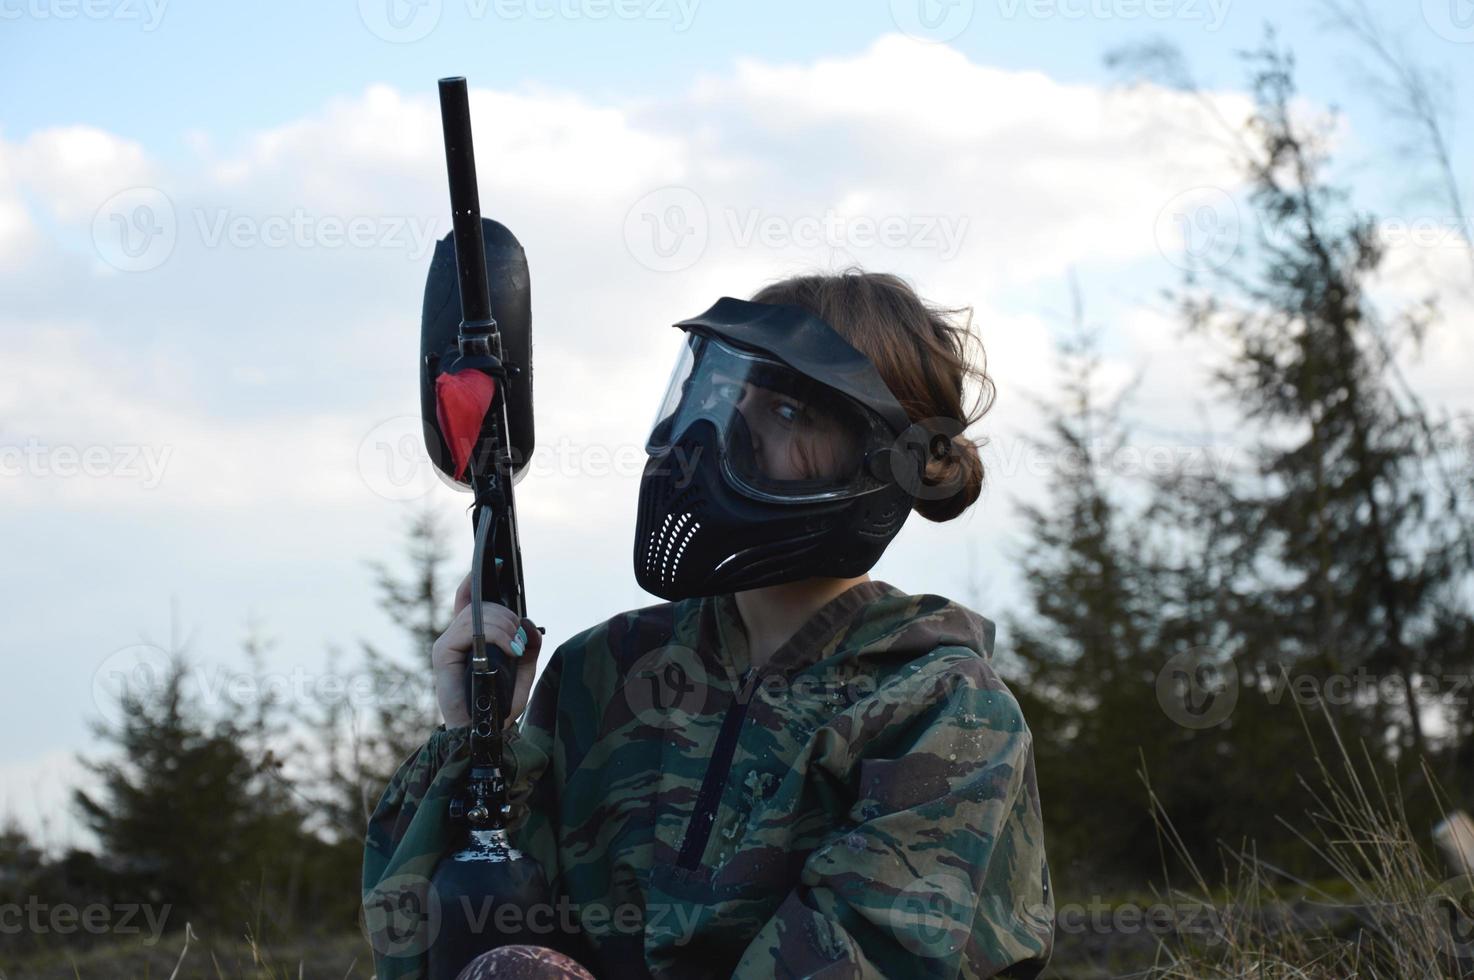 paintball sportspelare tjej i skyddande kamouflage uniform och mask foto